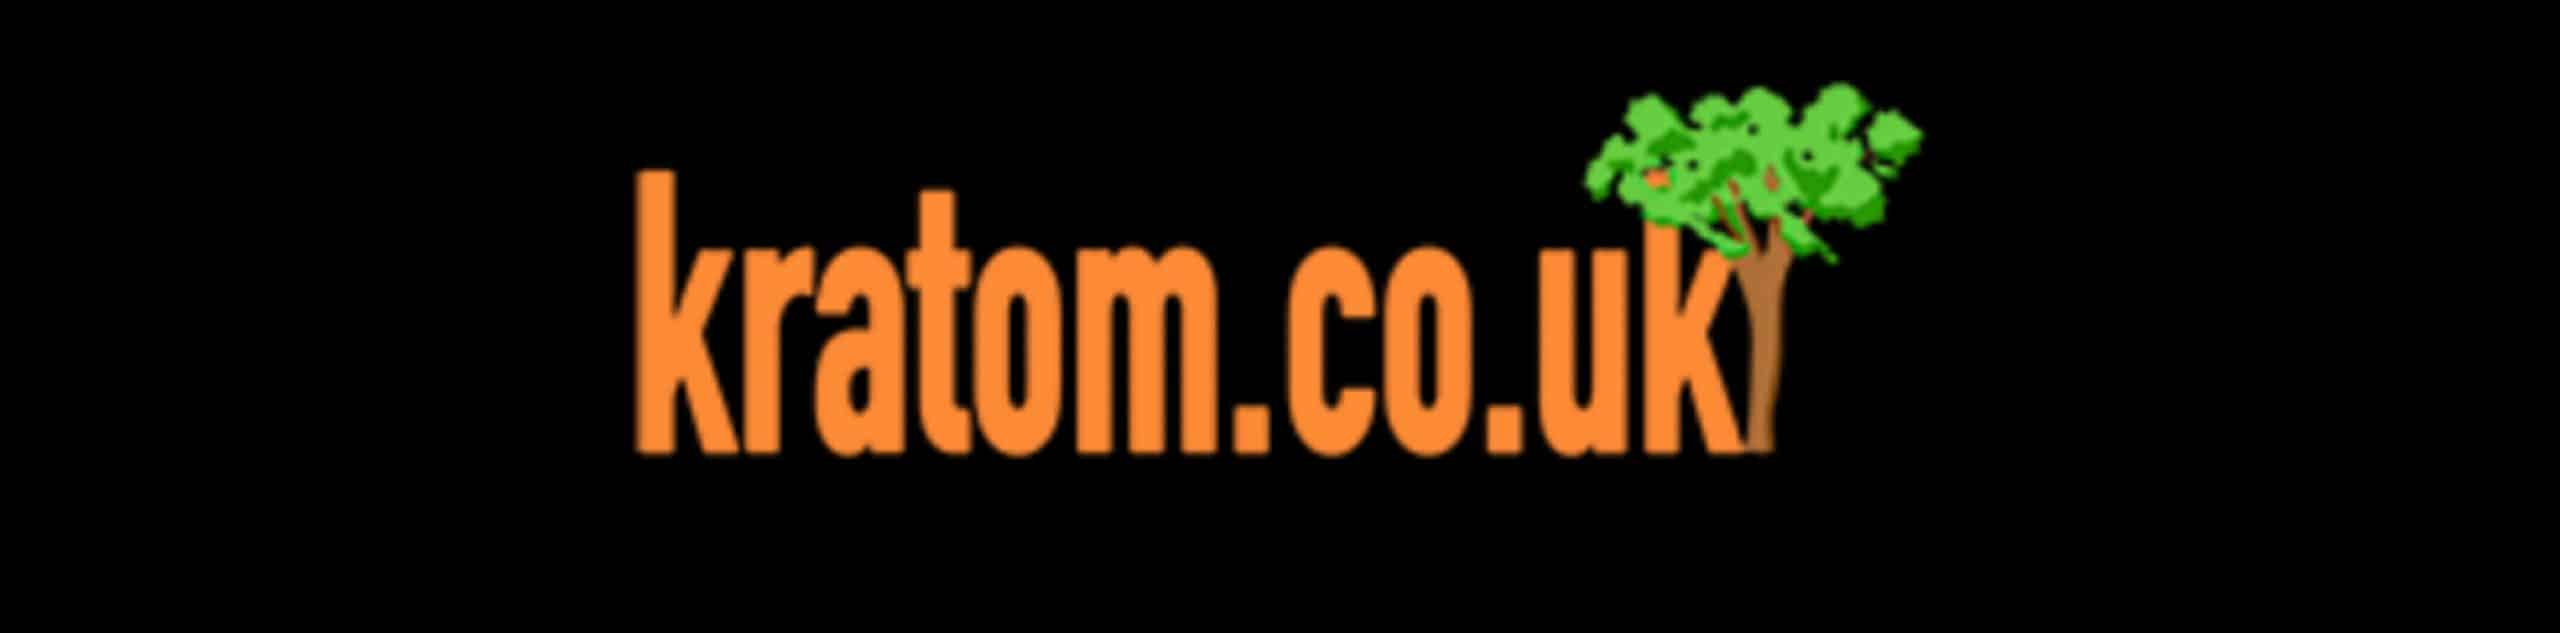 image of kratom.com.uk logo